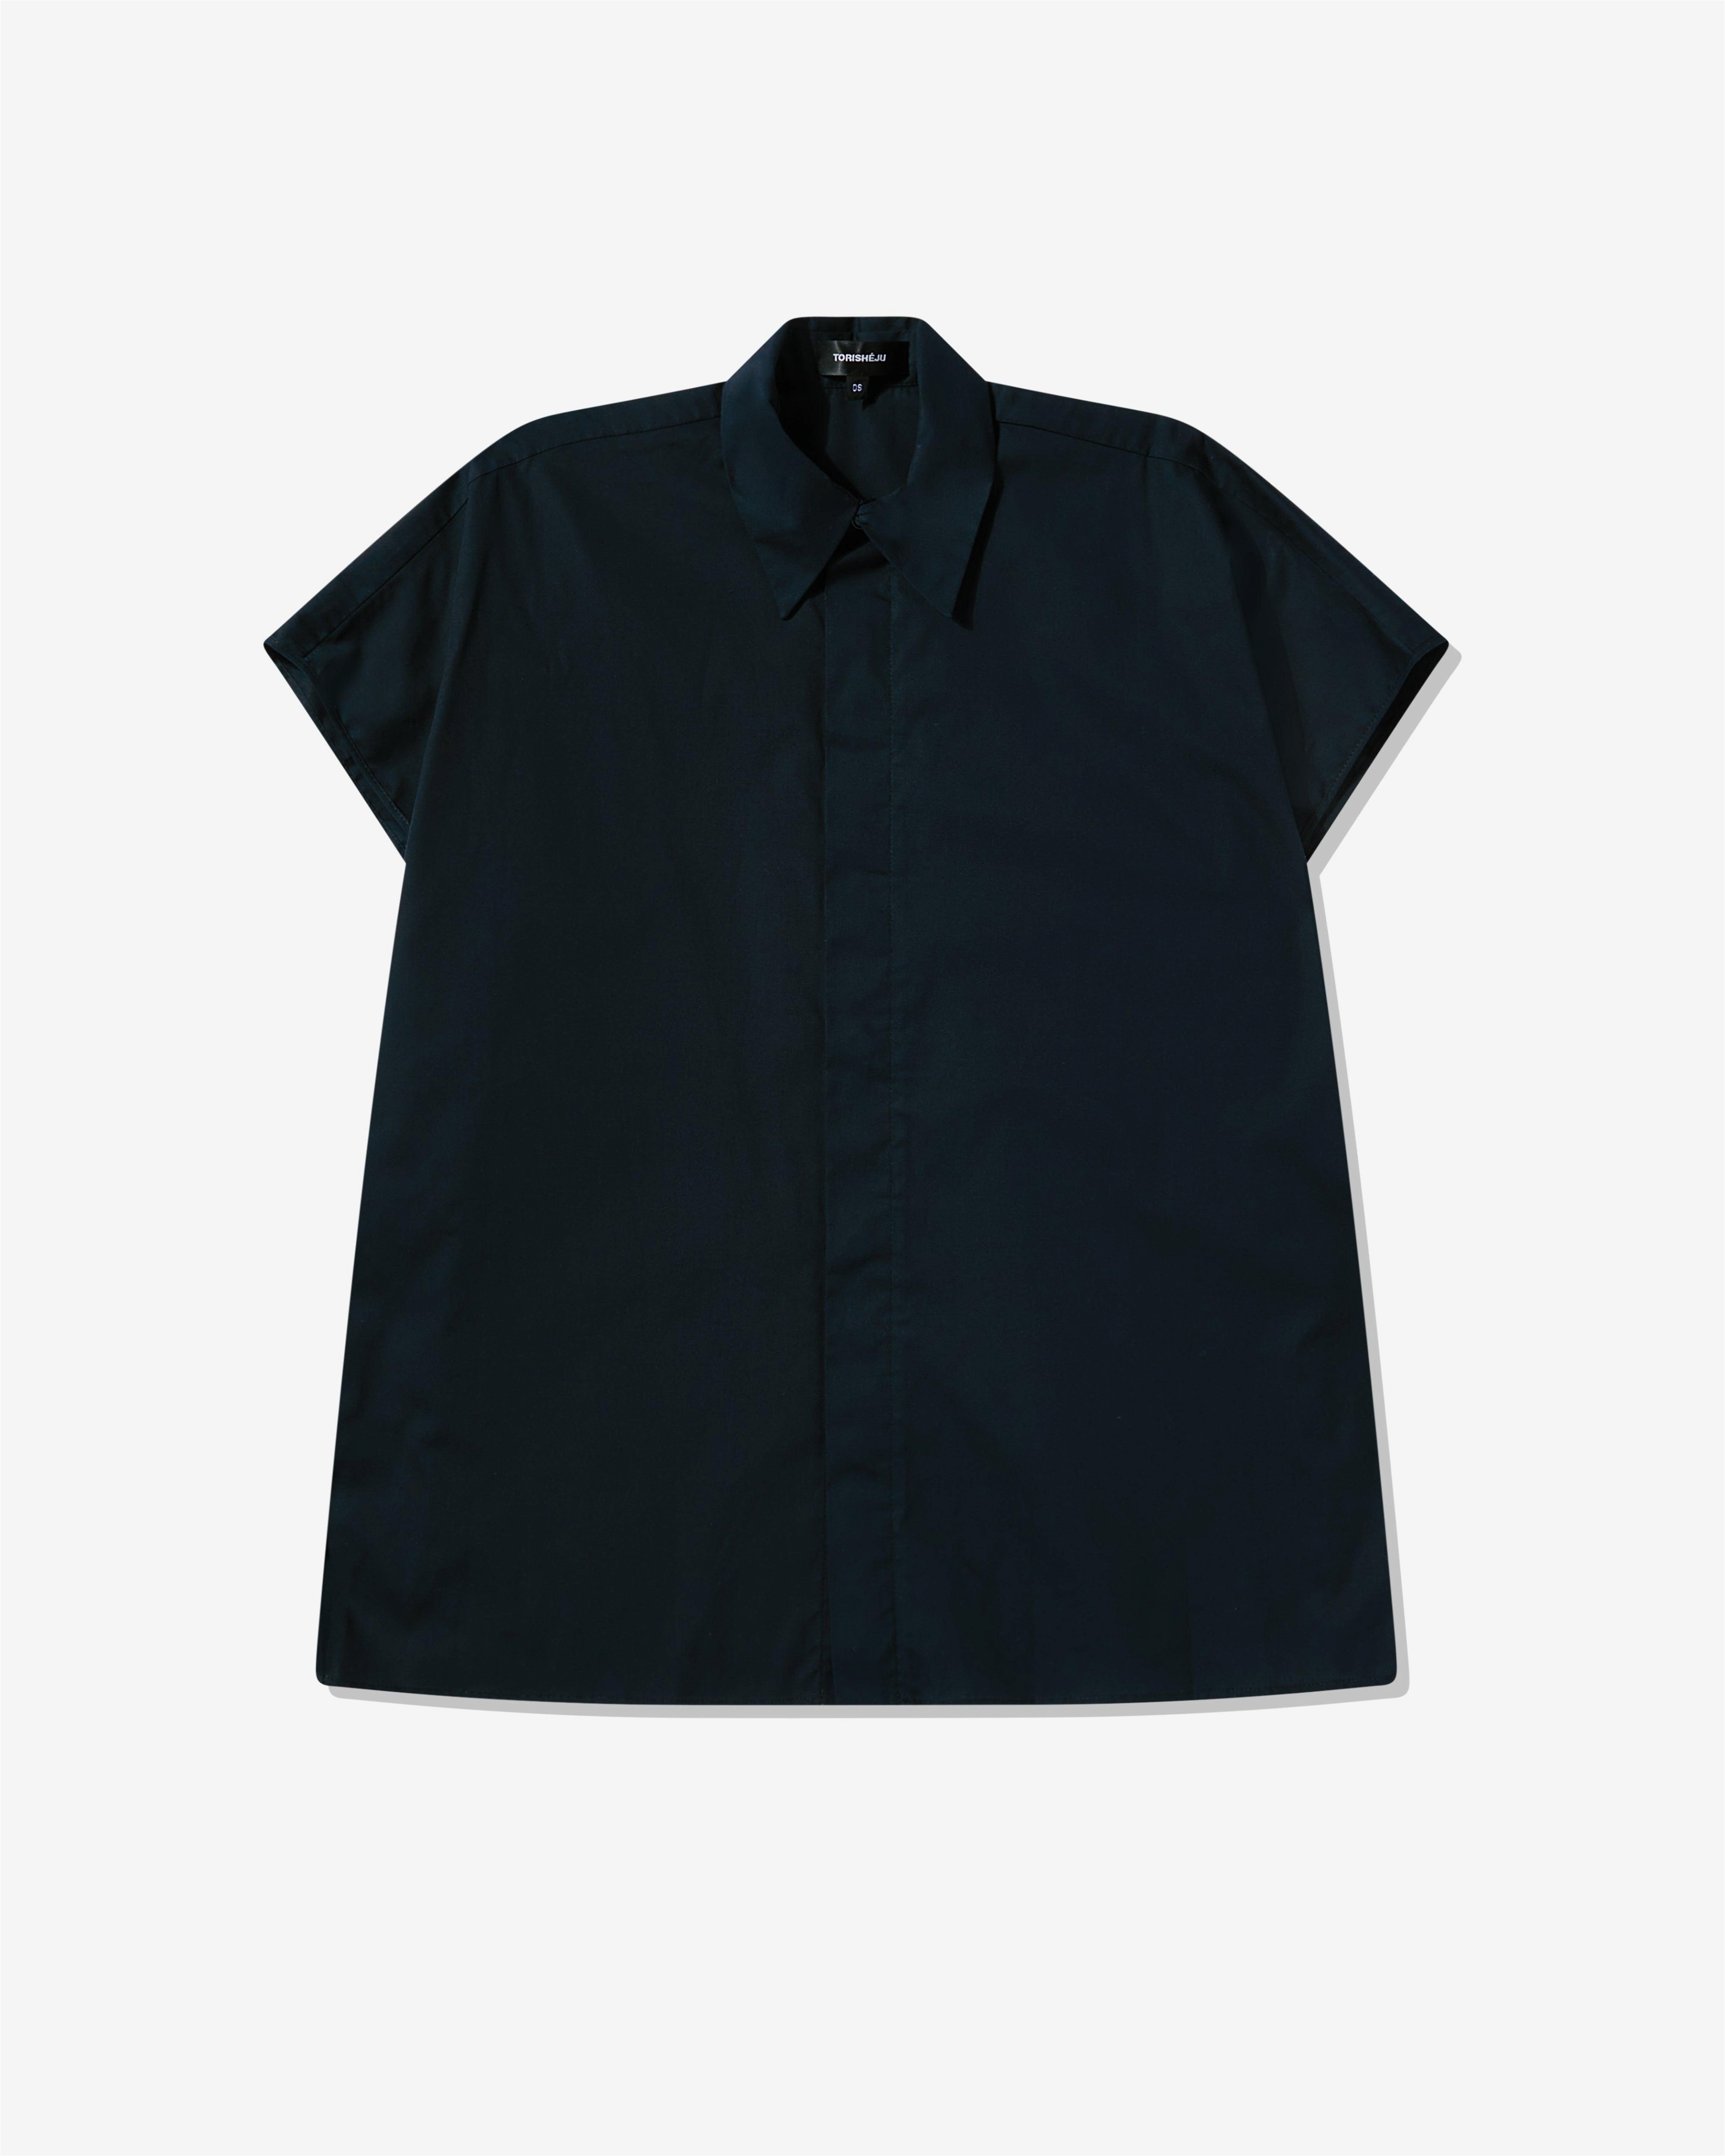 Torisheju - Women's Square Short Sleeve Shirt - (Black) by TORISHEJU